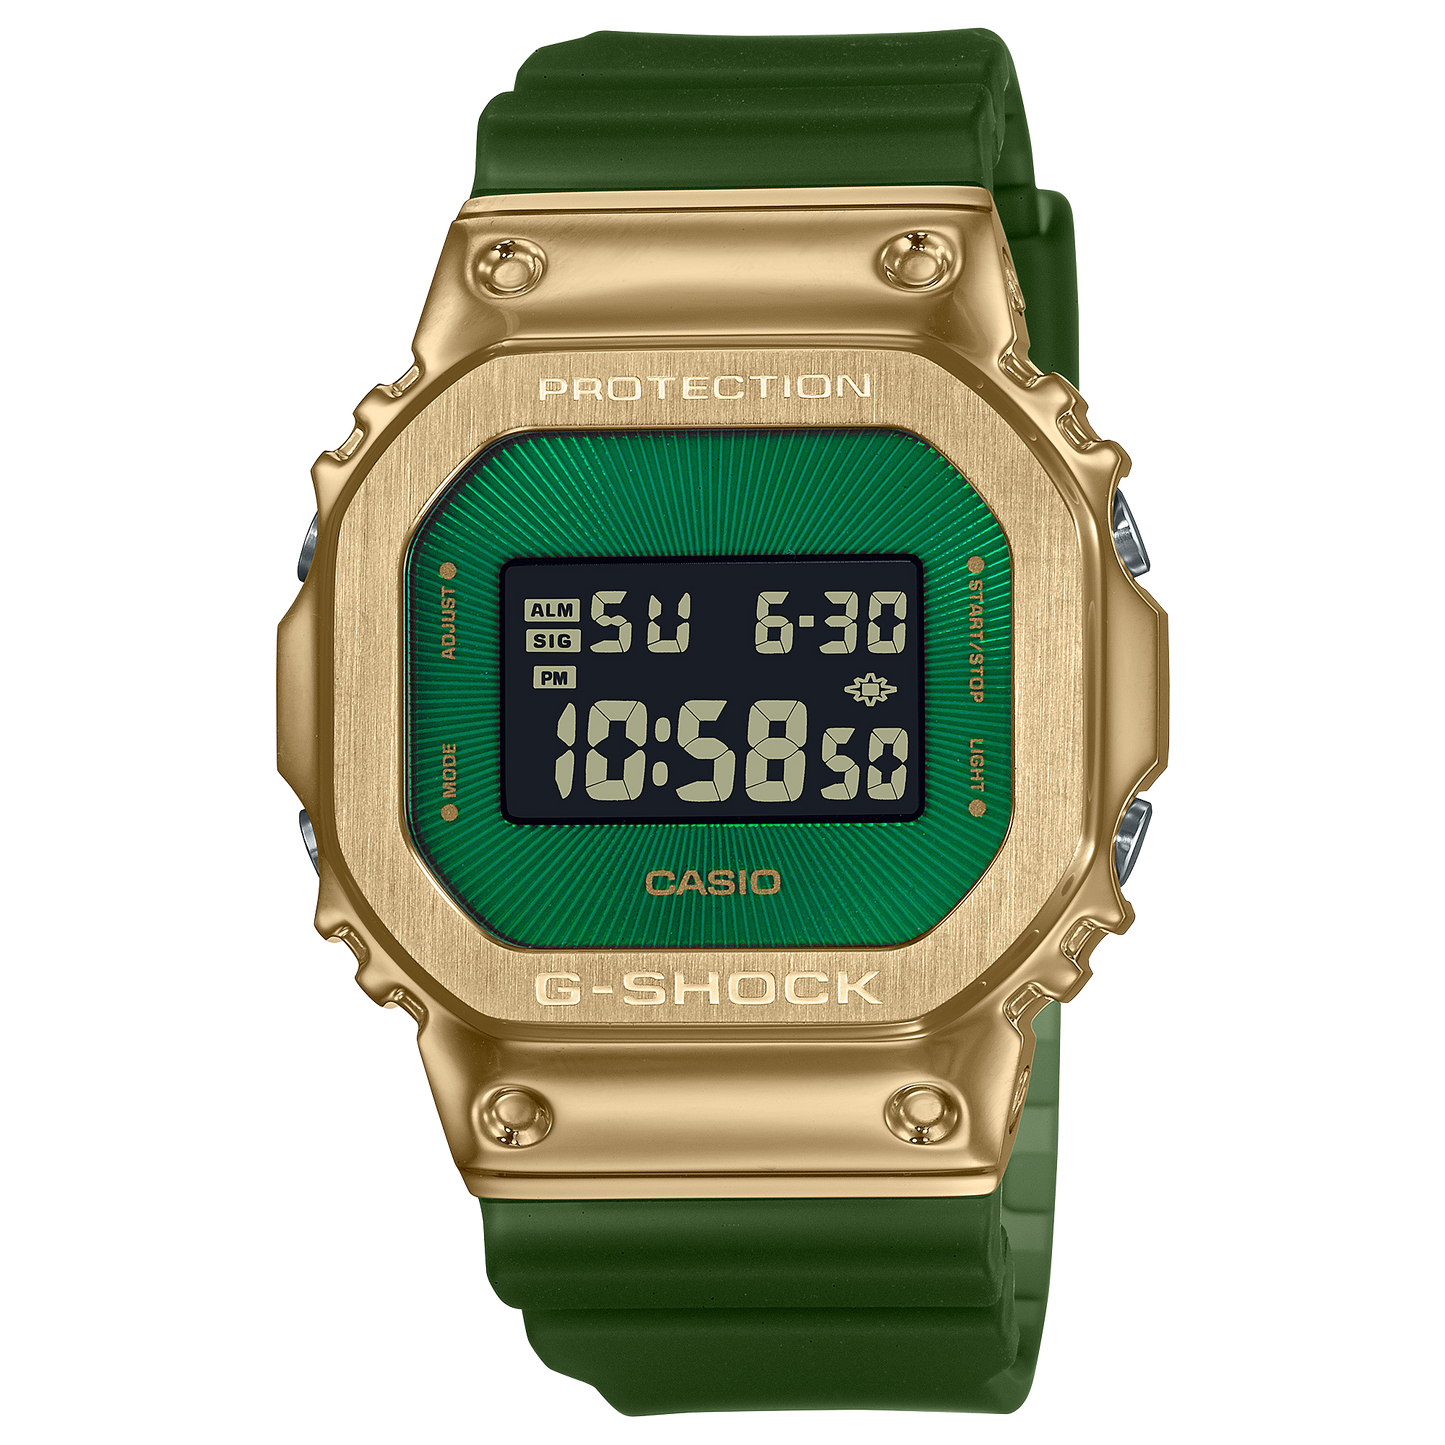 Casio G-Shock GM-5600CL-3DR Digital Men's Watch Green